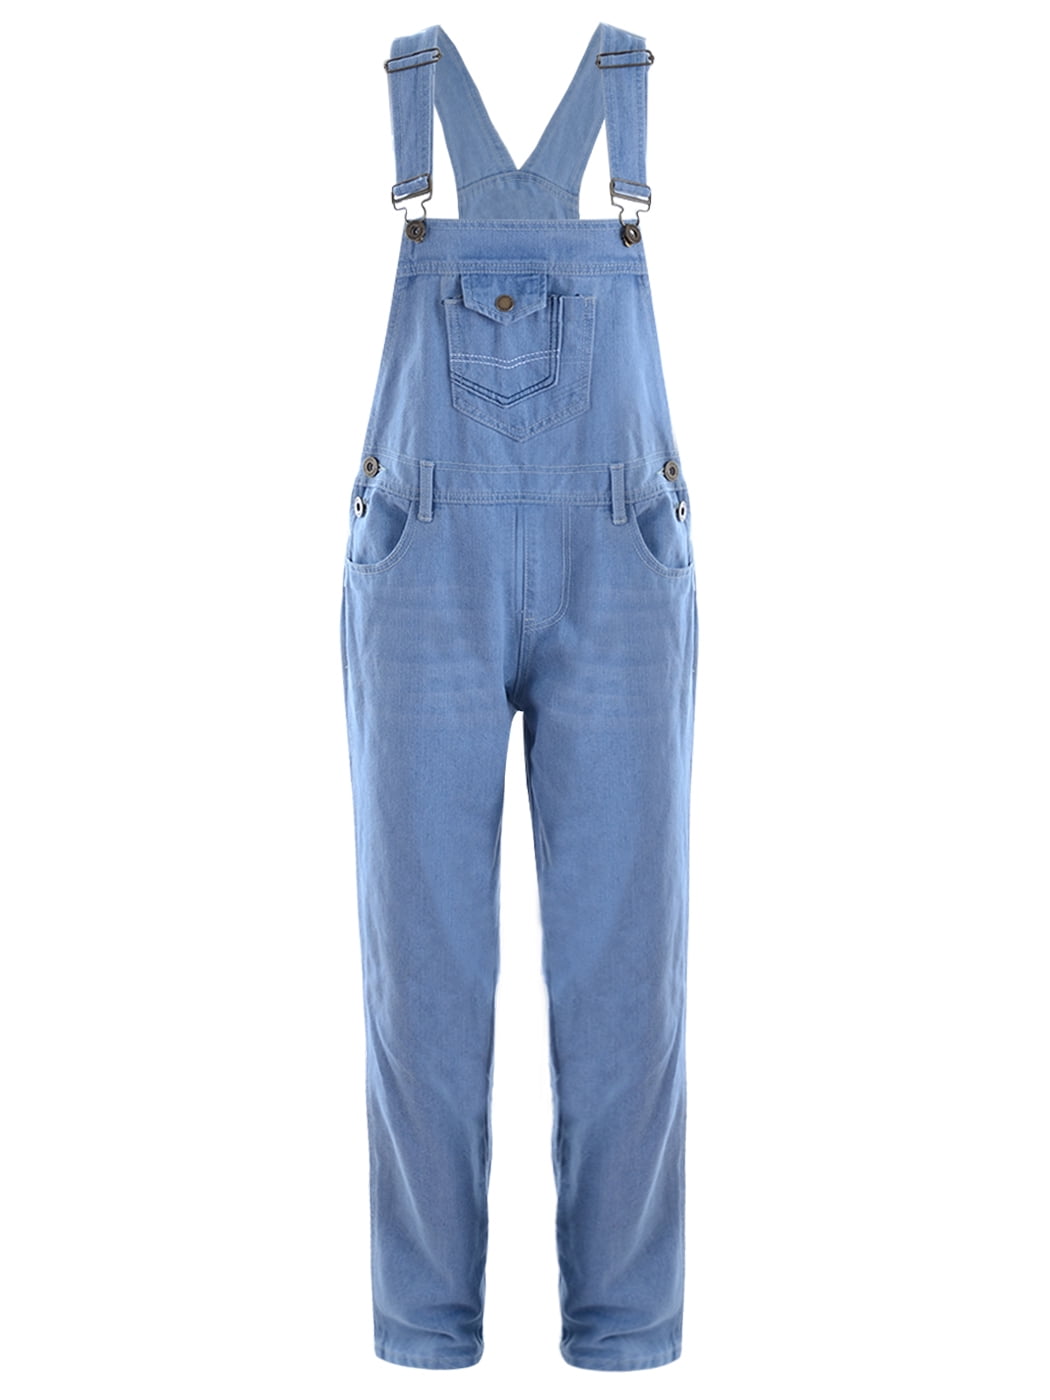 blue jean overalls